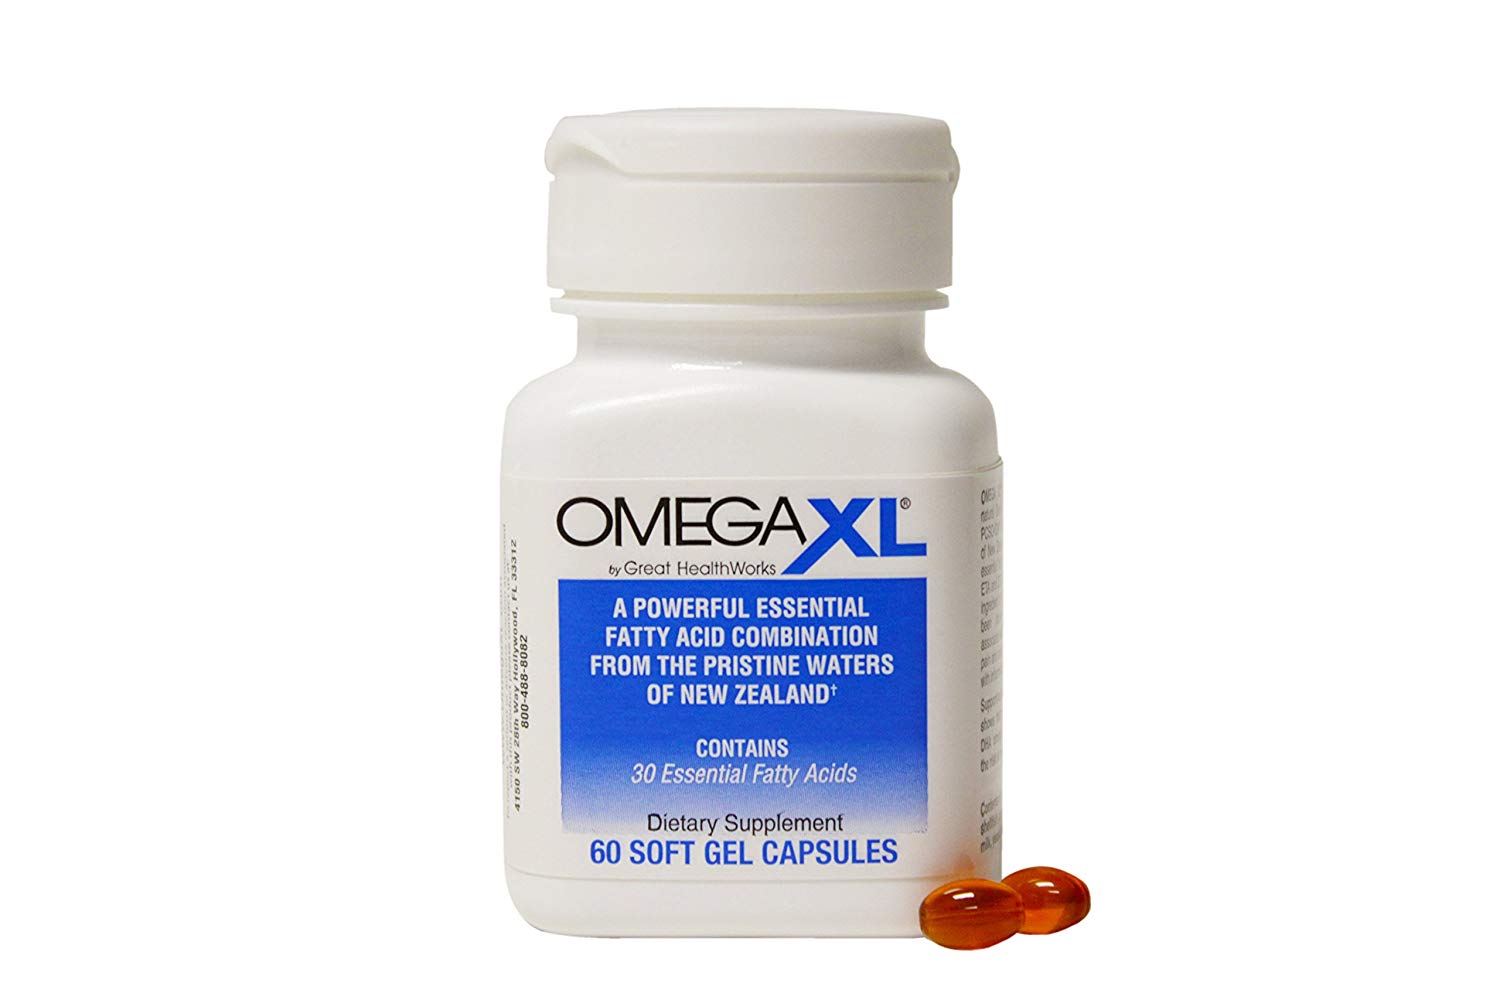 Omega XL - Great Health Works